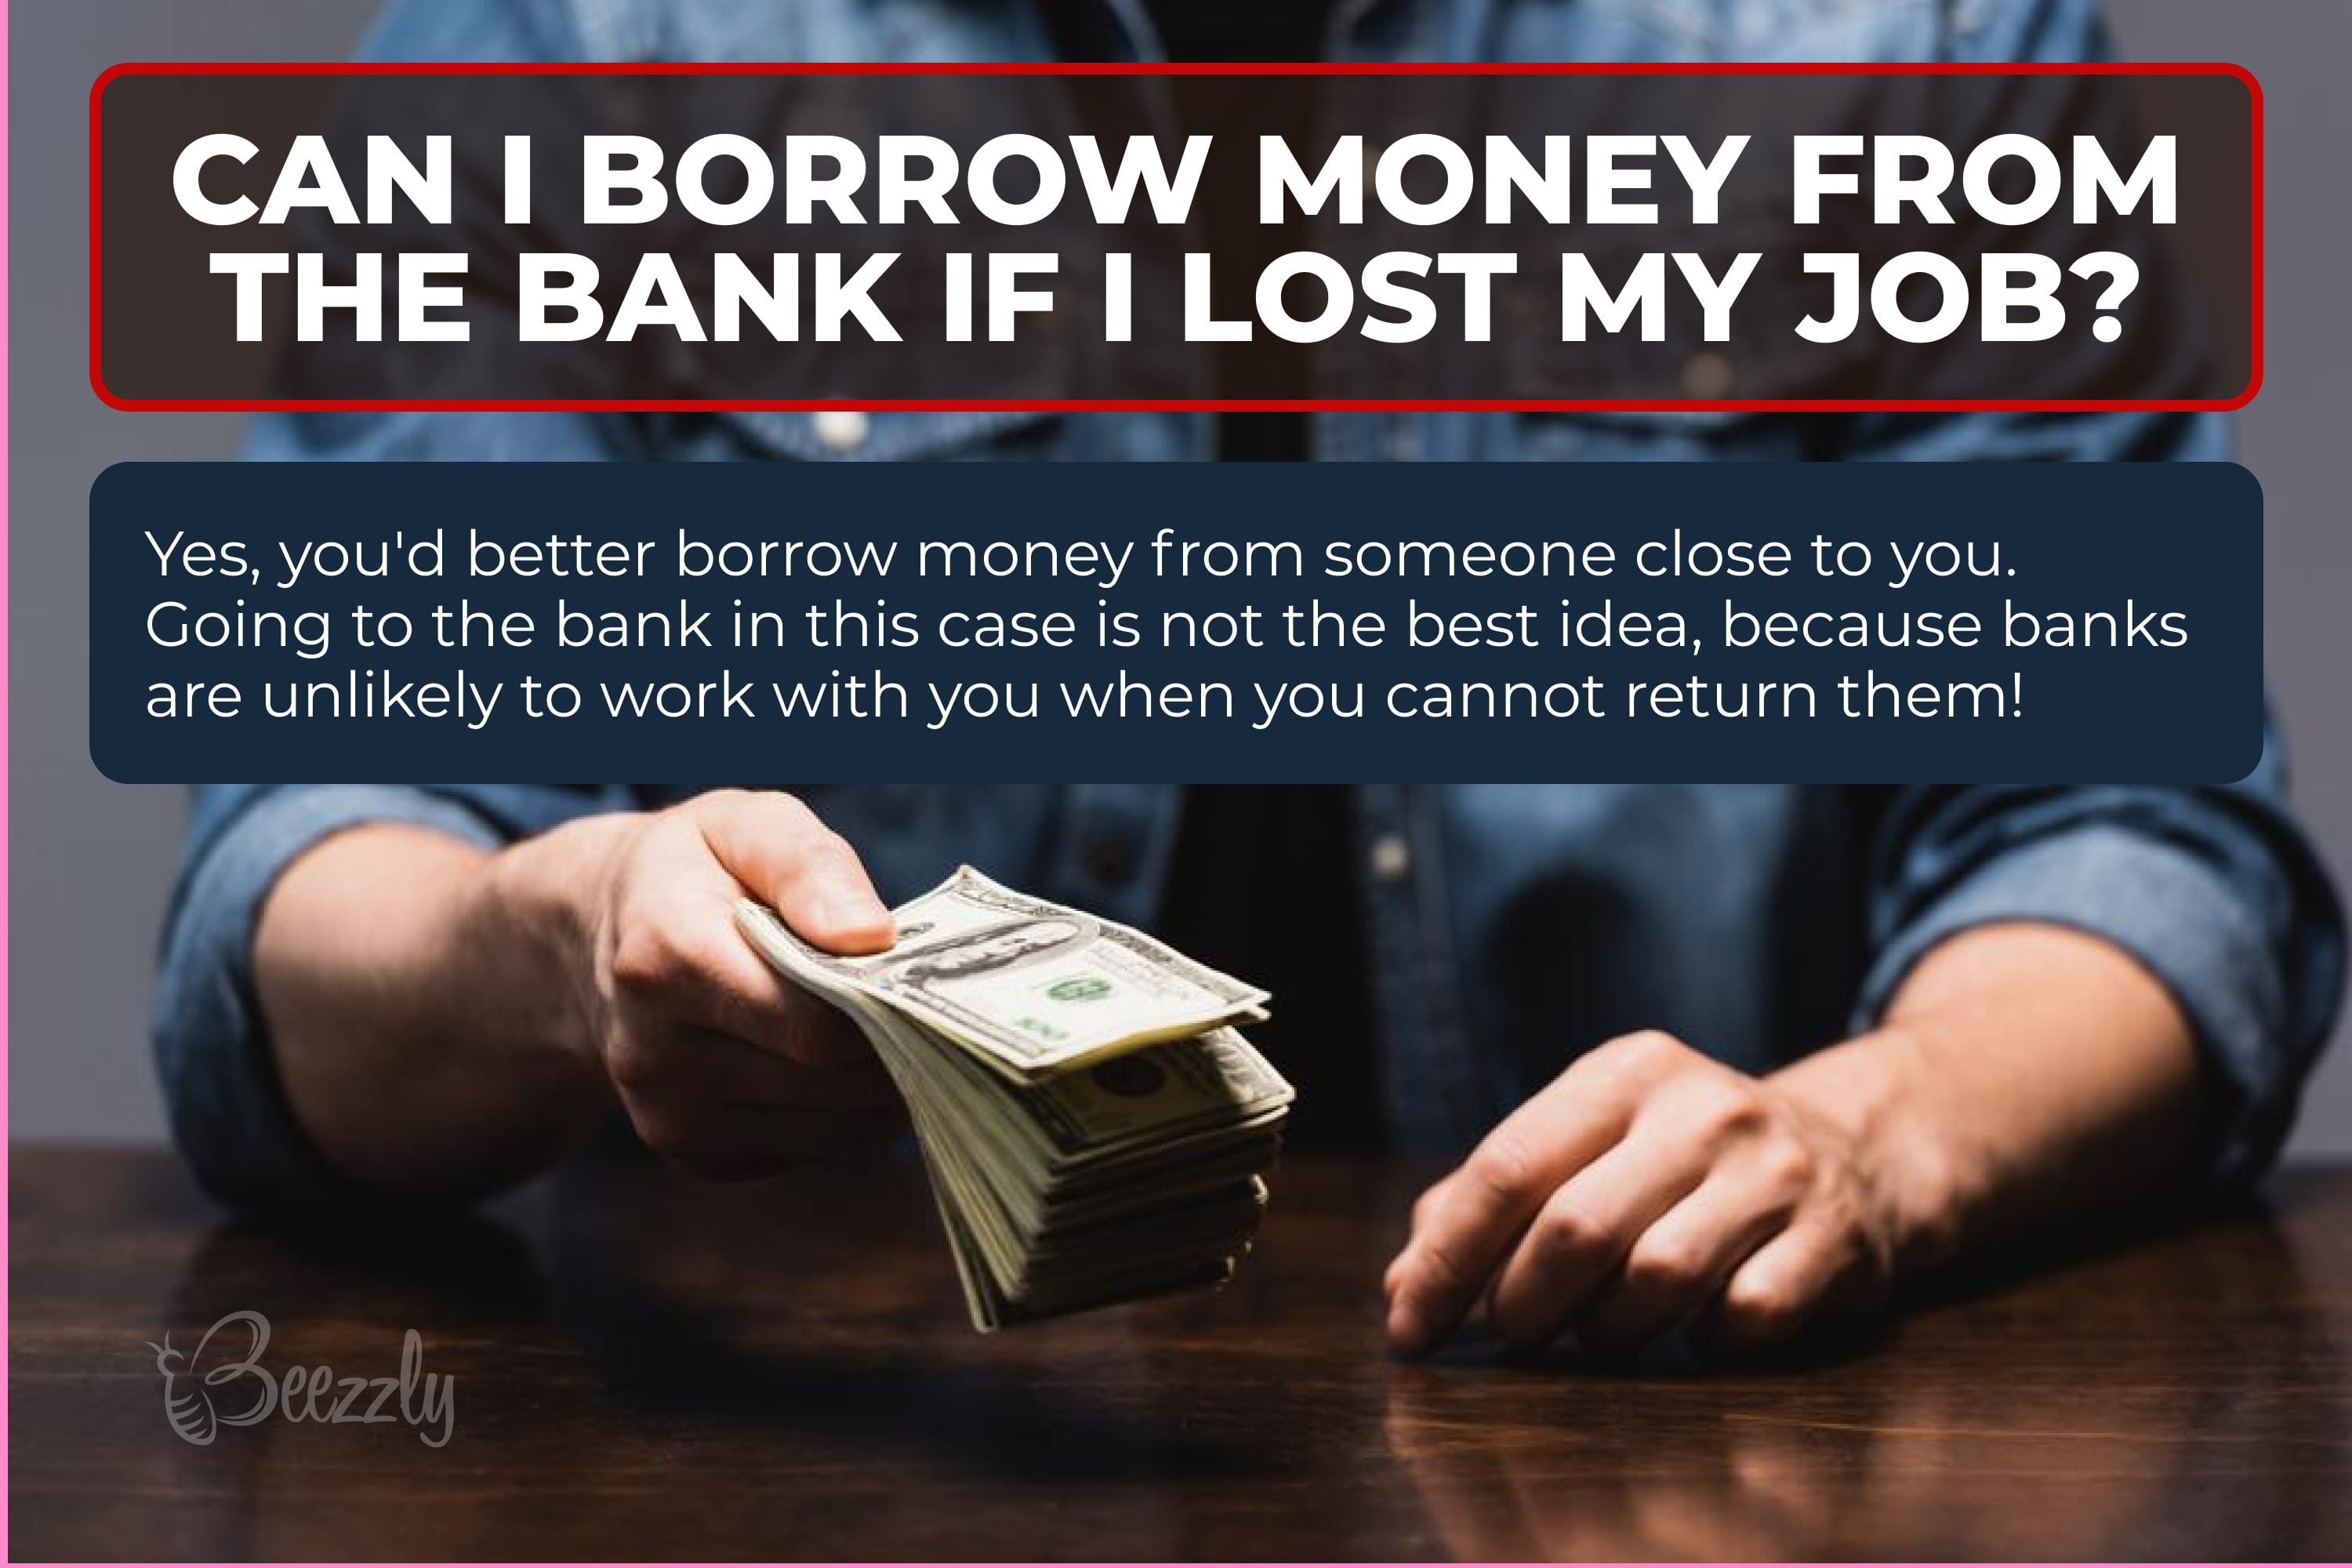 Can I borrow money from the bank if I lost my job